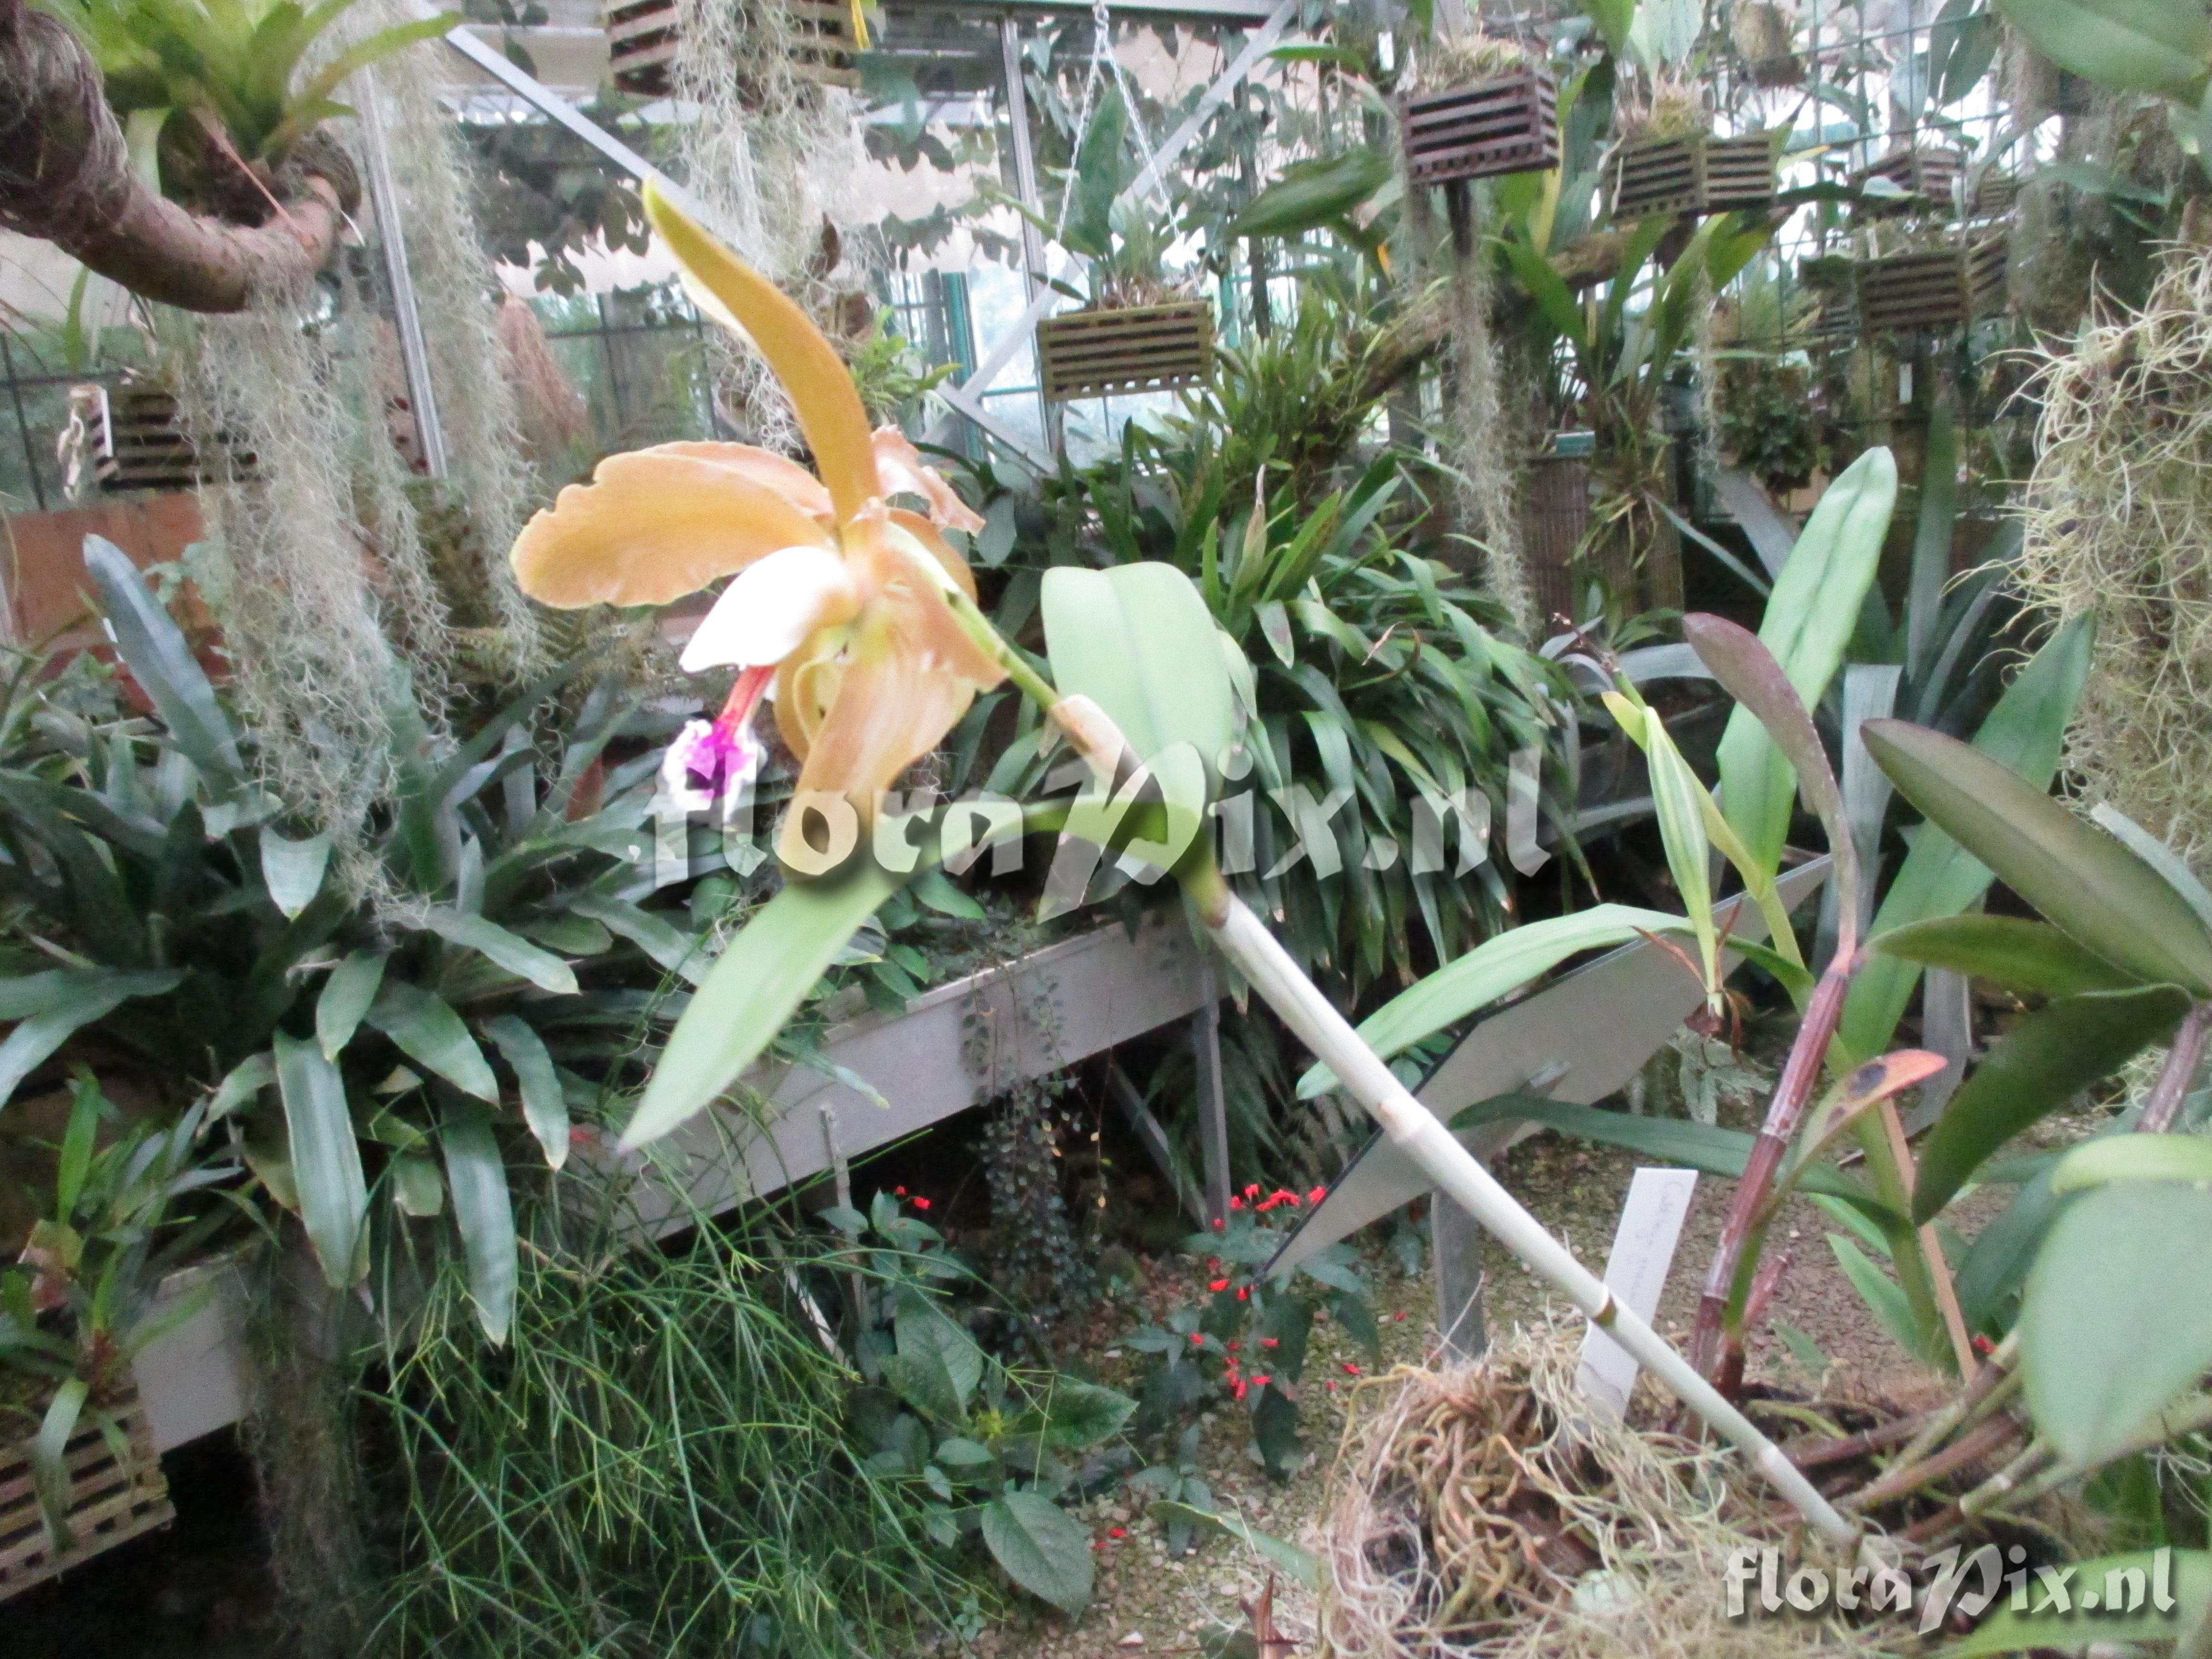 Cattleya granulosa